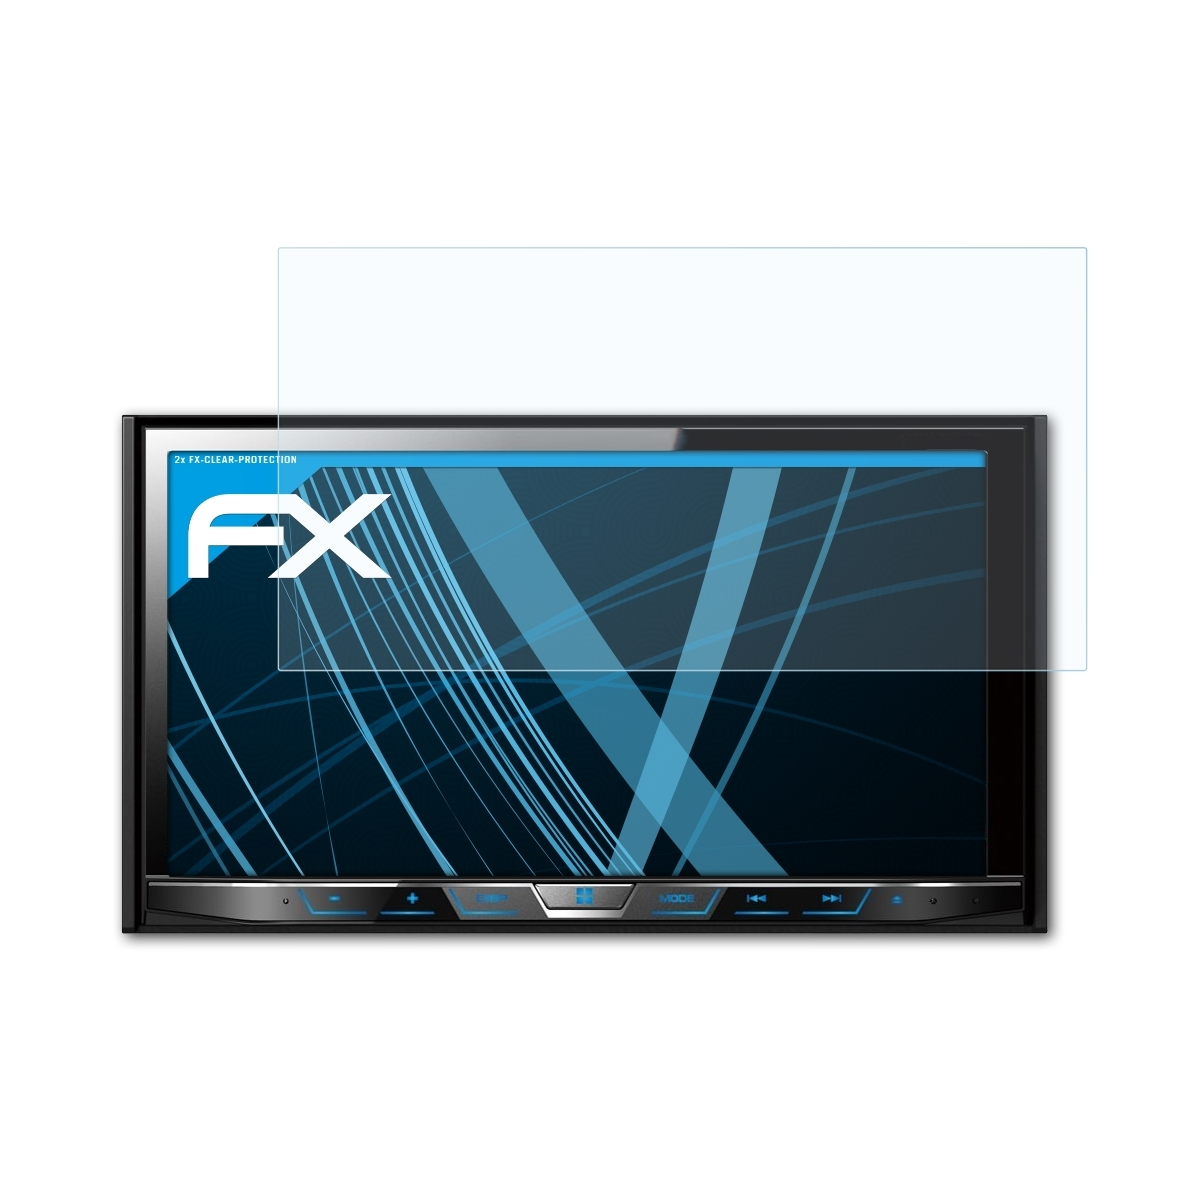 X5800DAB) ATFOLIX 2x FX-Clear Pioneer Displayschutz(für / AVH-X5700DAB